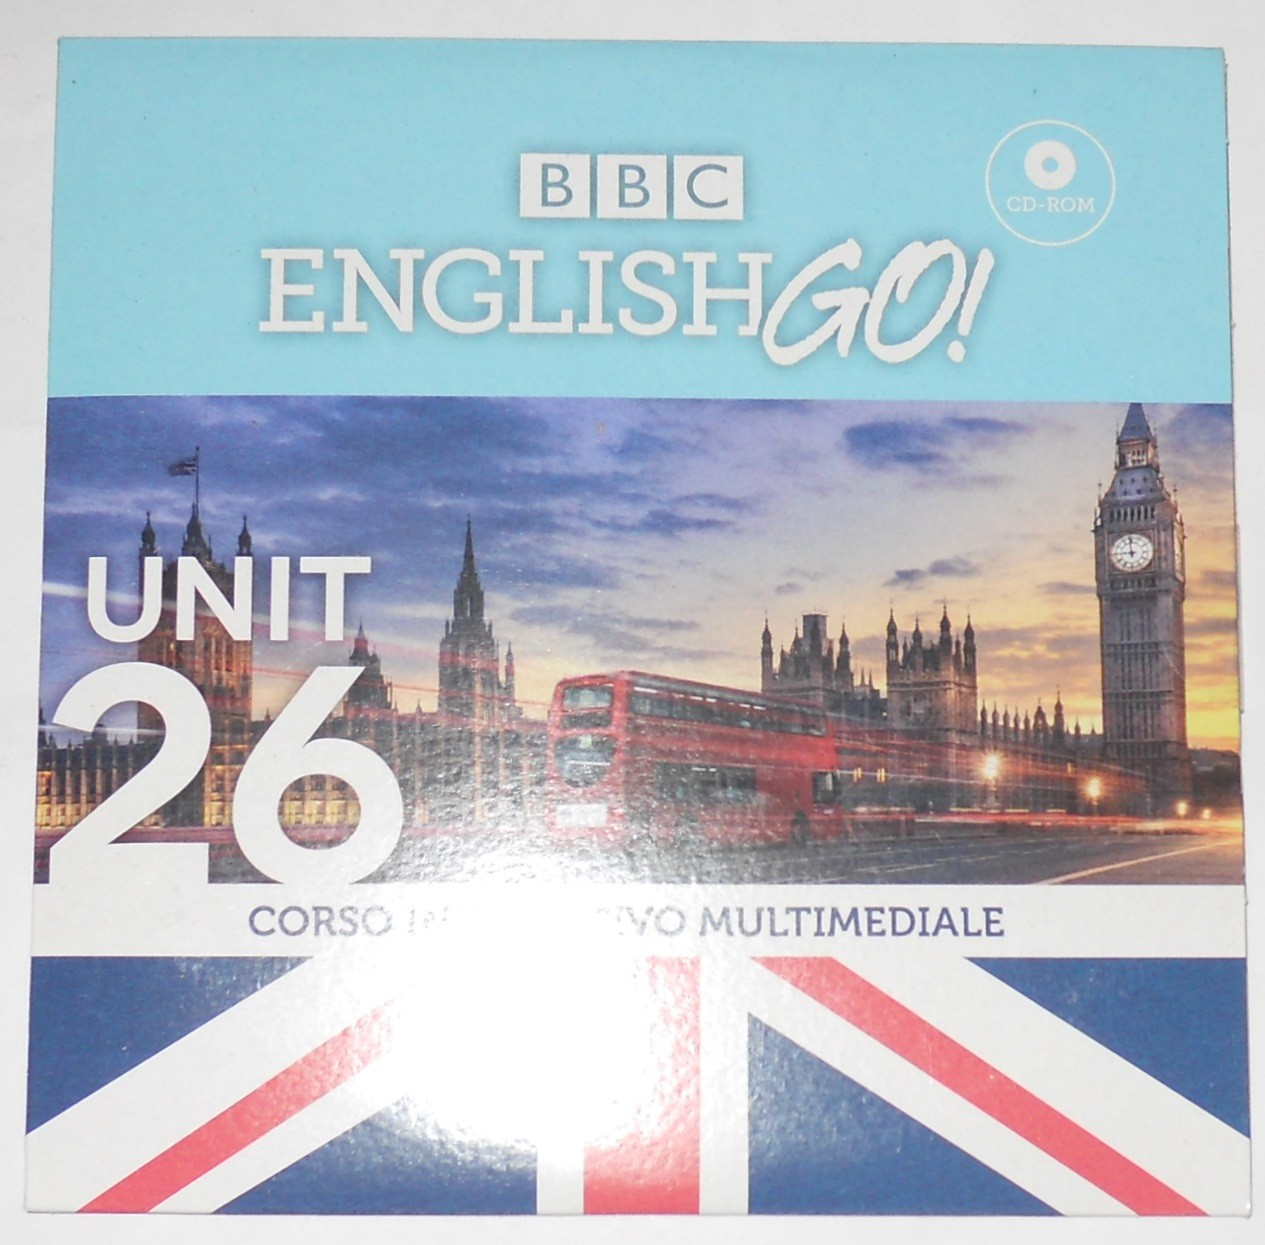 BBC English GO! Unit. 26